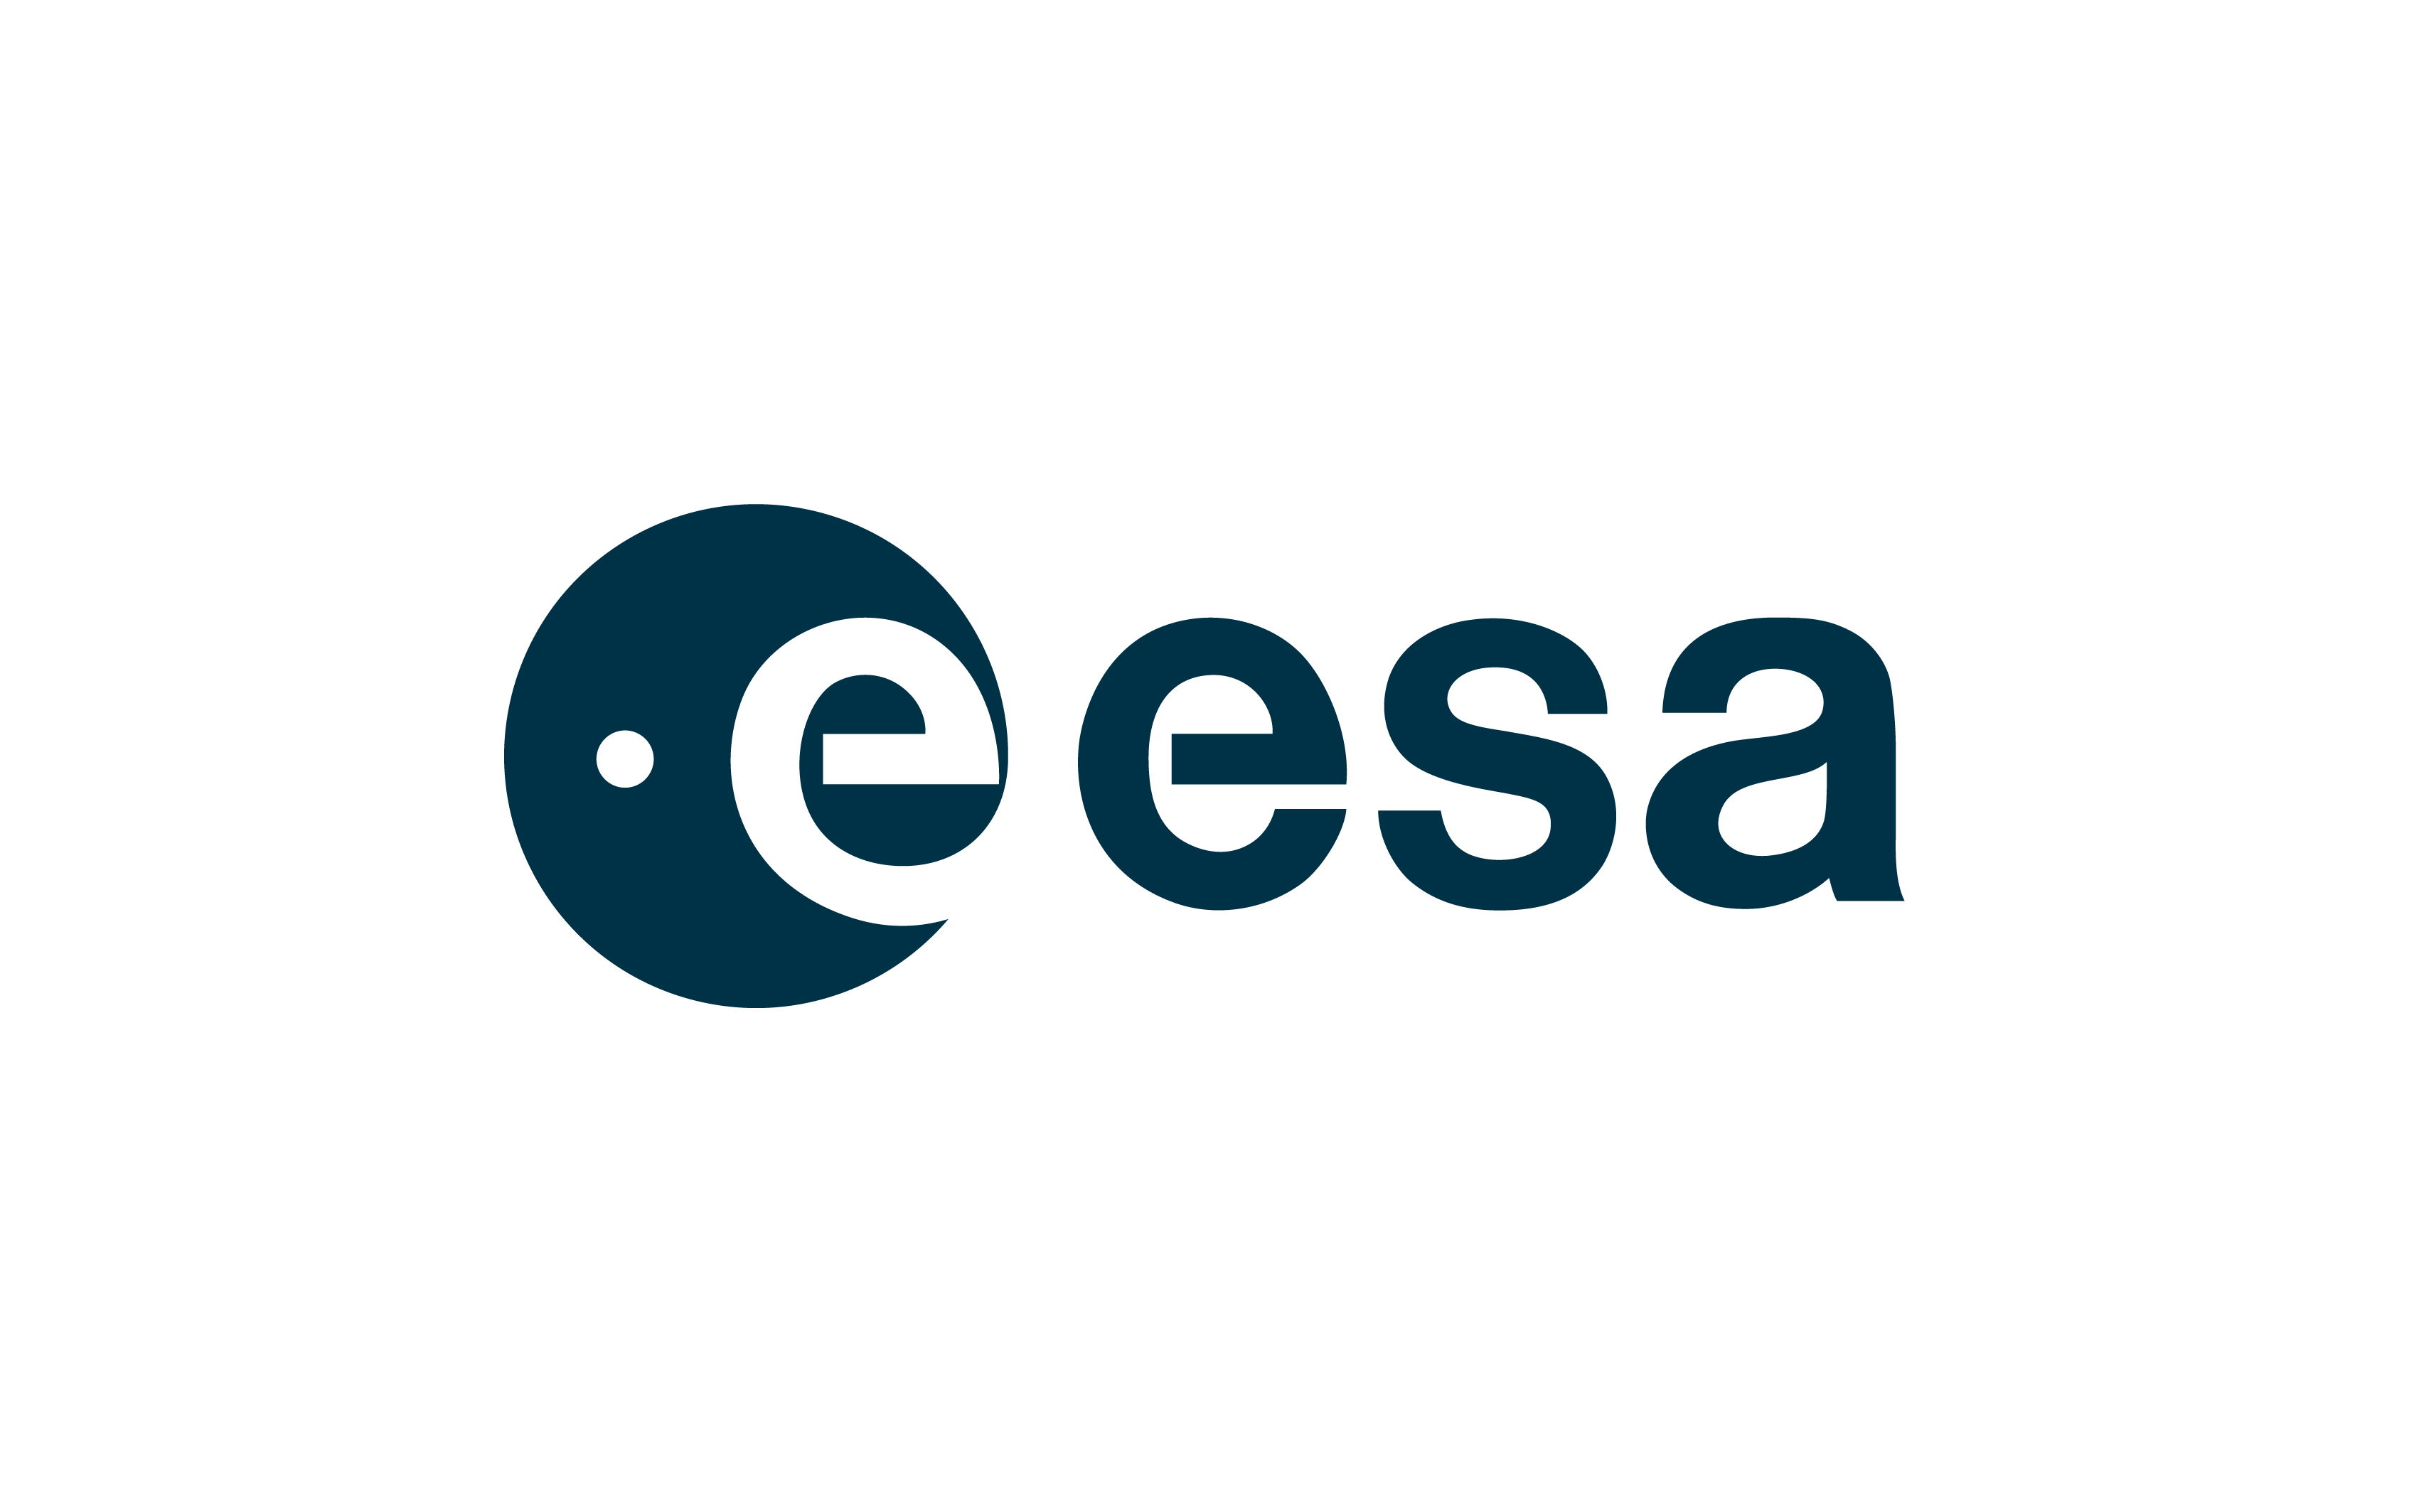 The European Space Agency logo